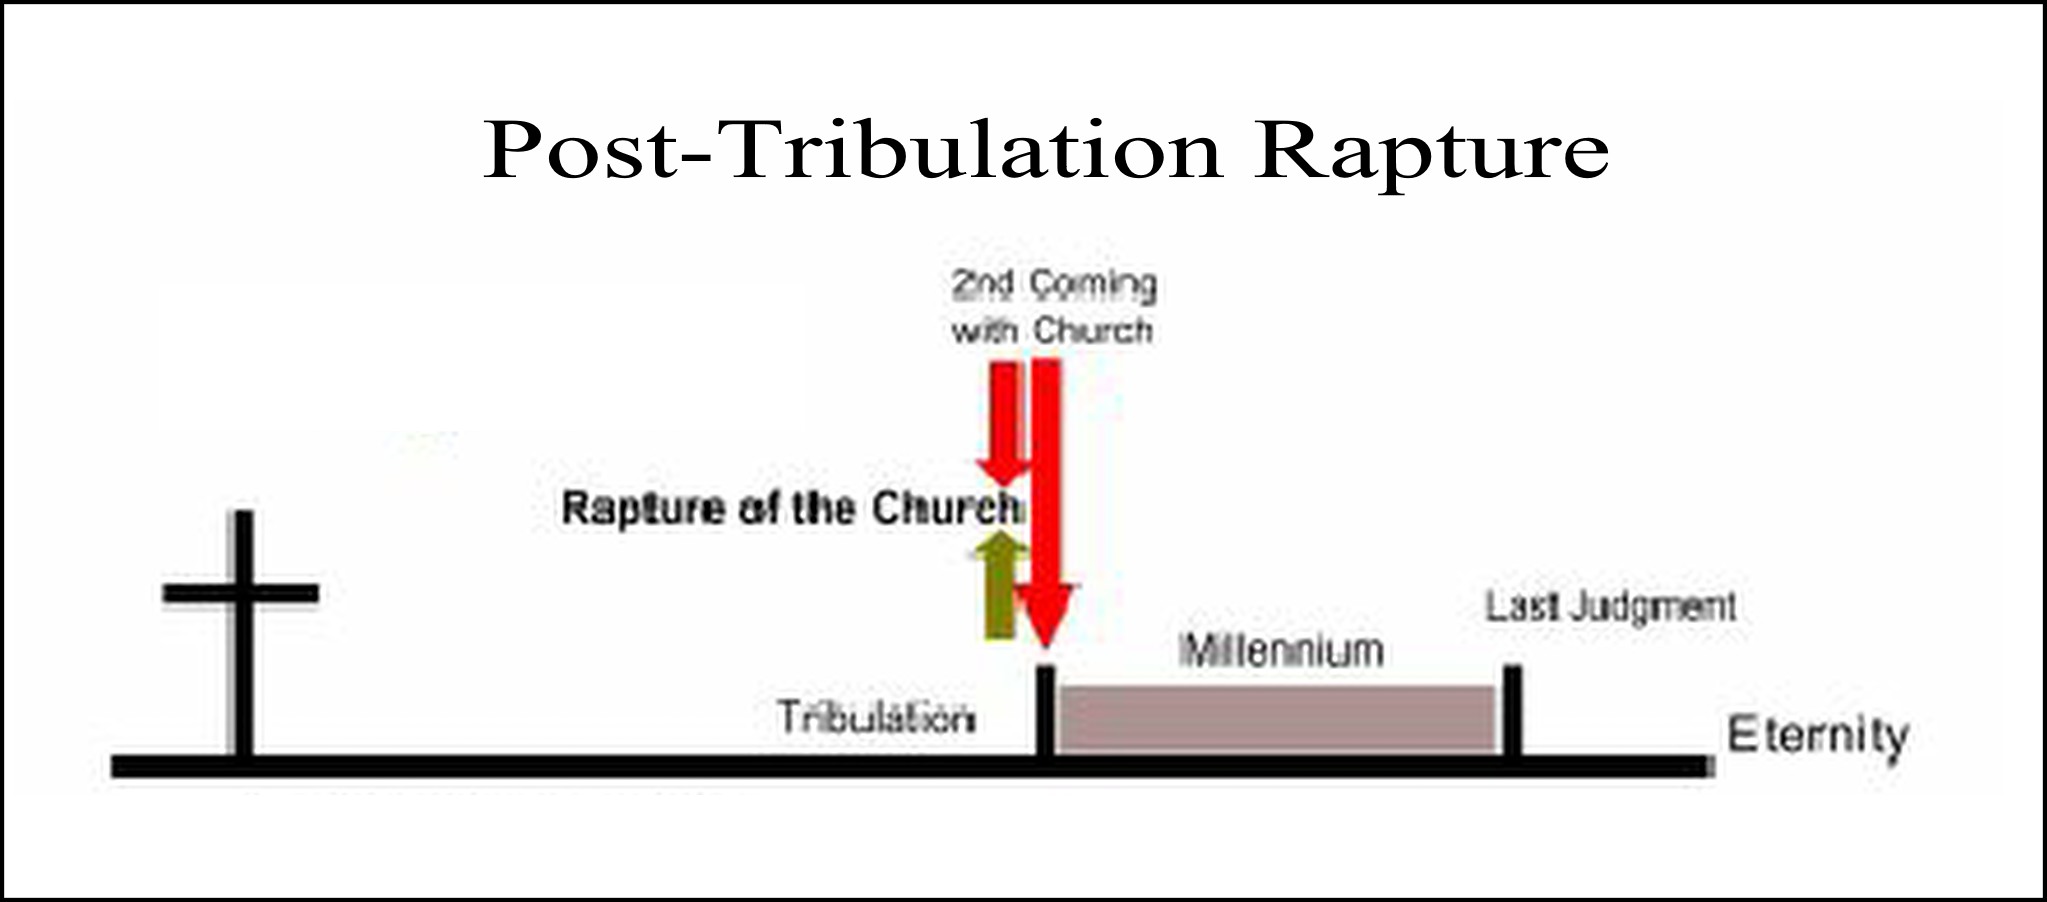 Post-tribulation Rapture